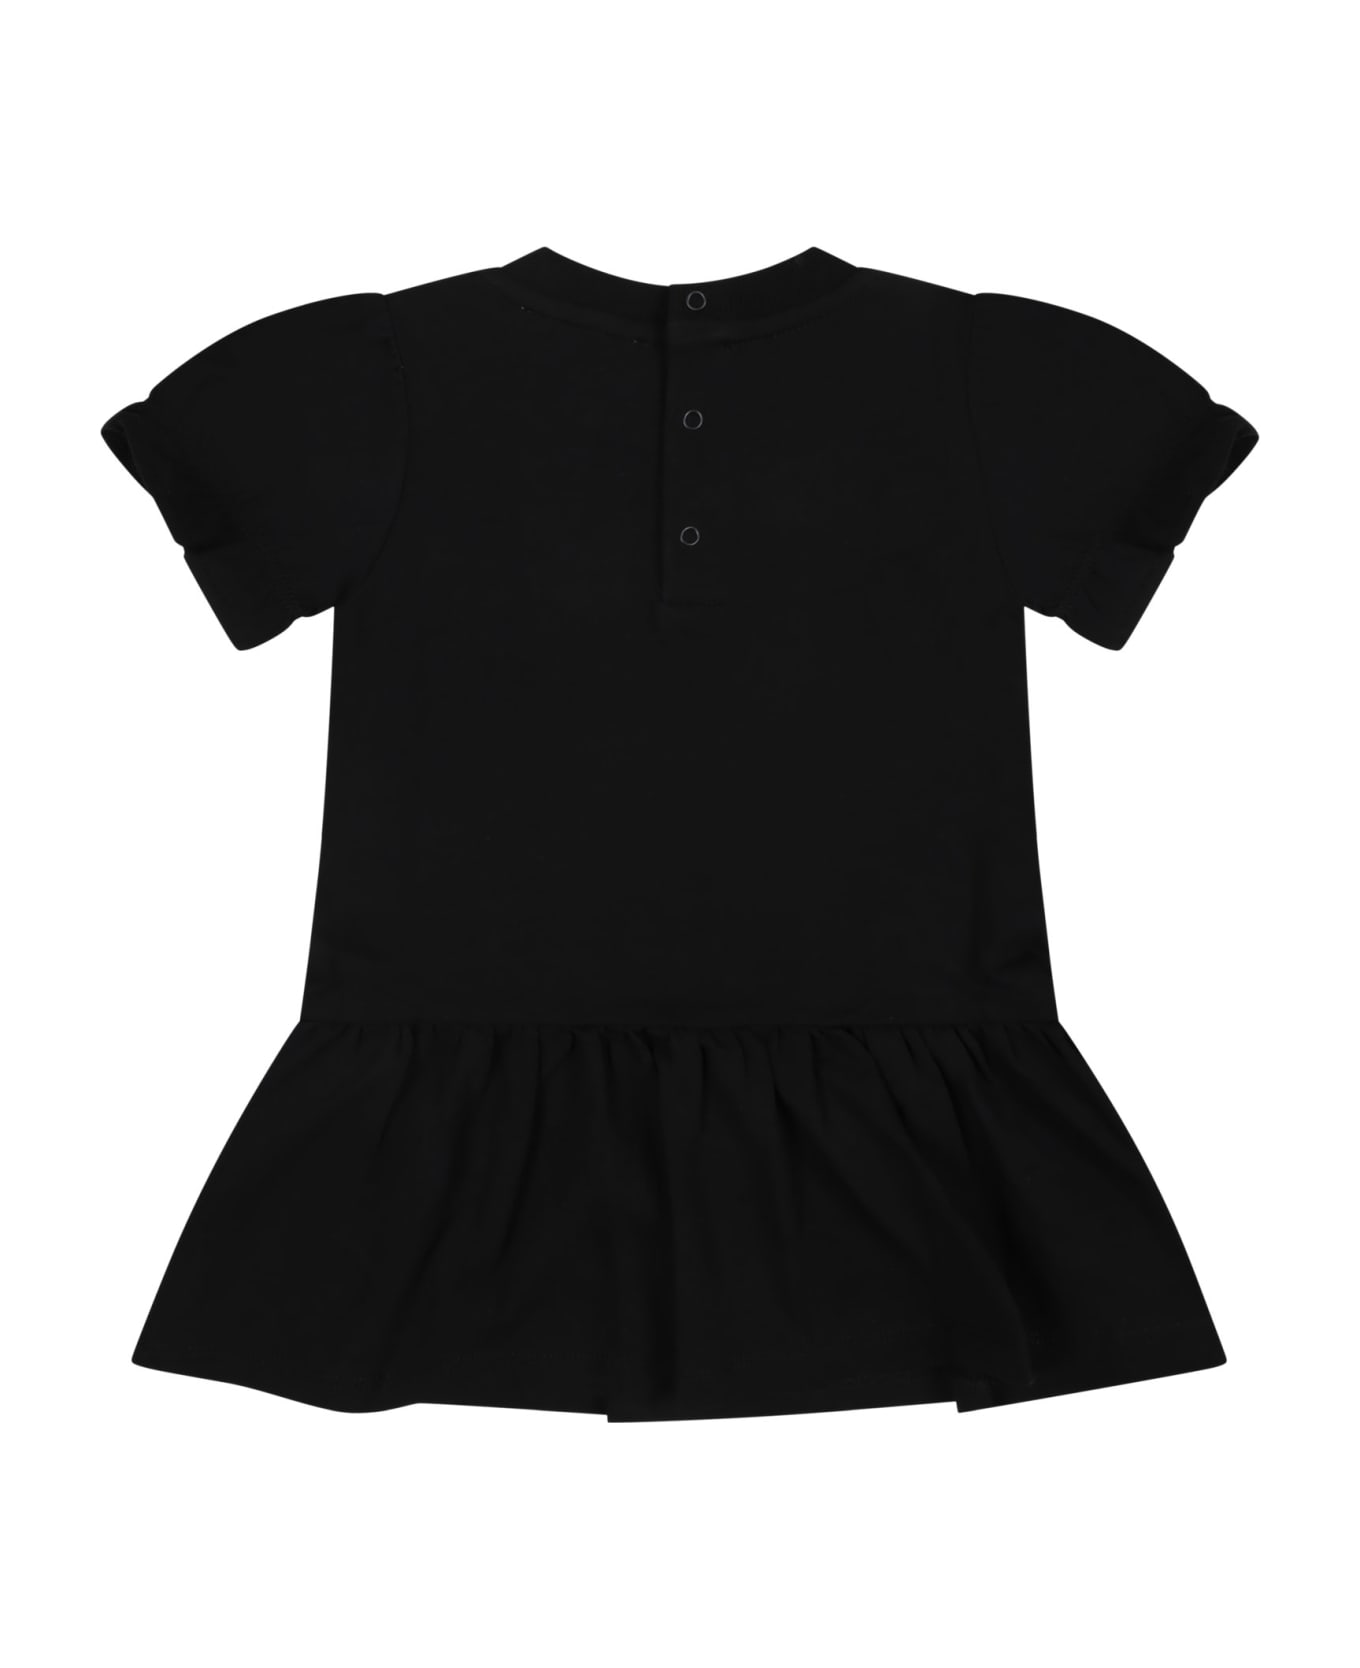 Moschino Black Dress For Baby Girl With Teddy Bear Print - Black